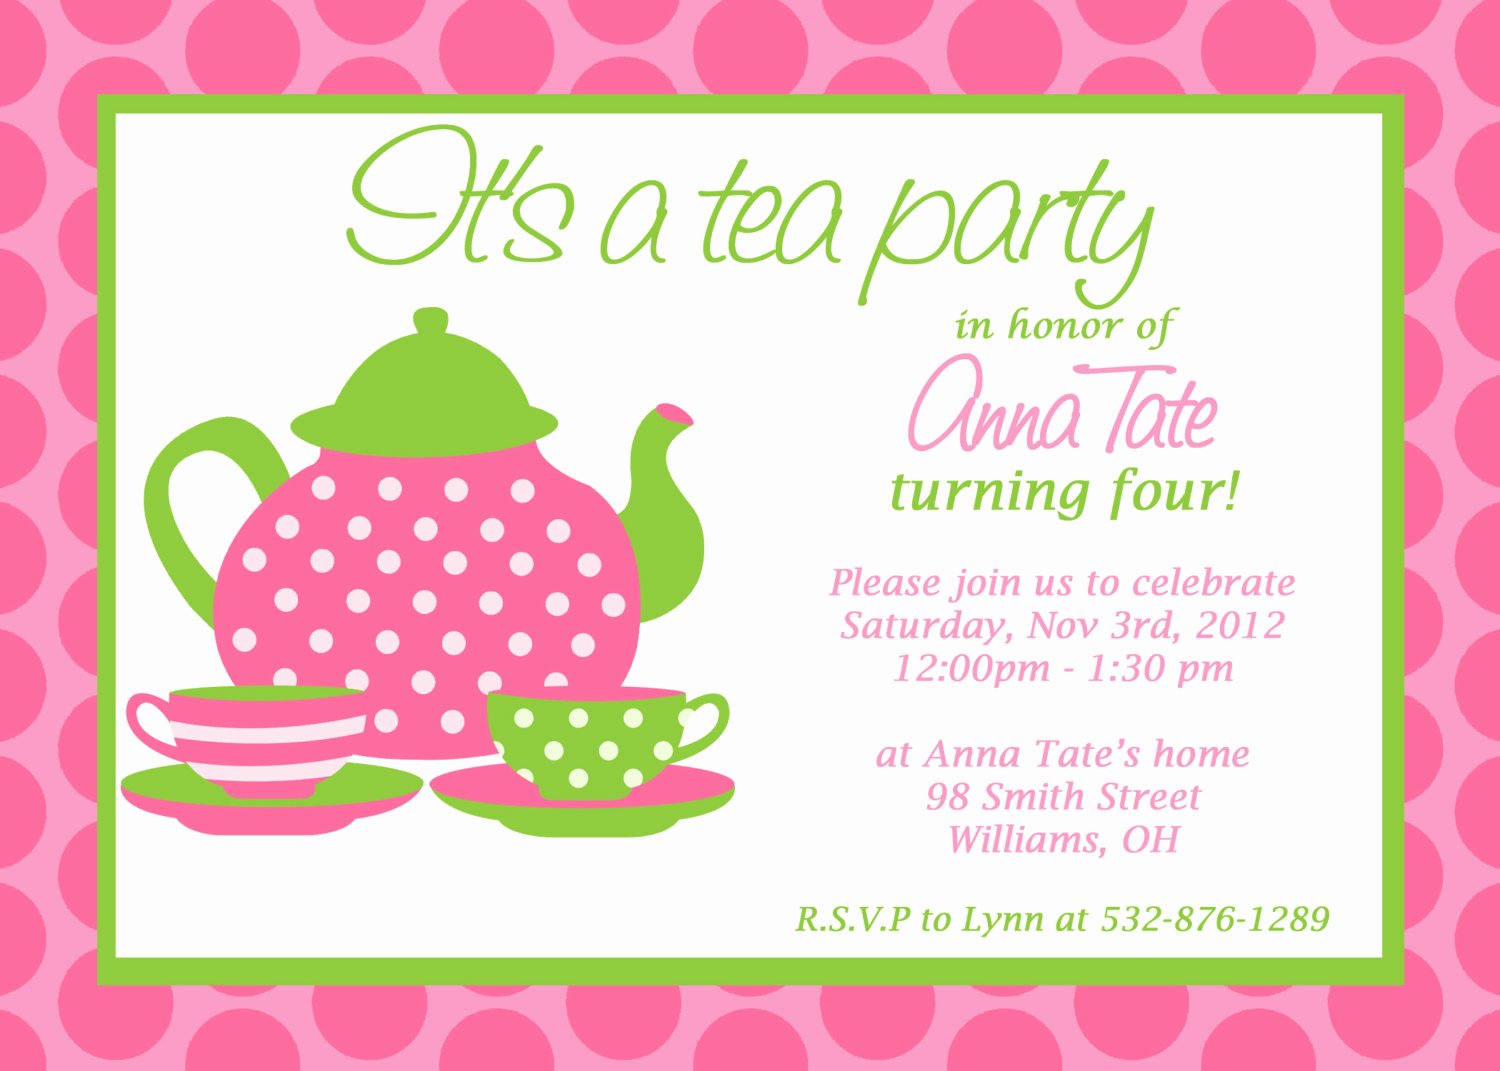 Princess Tea Party Birthday Invitations